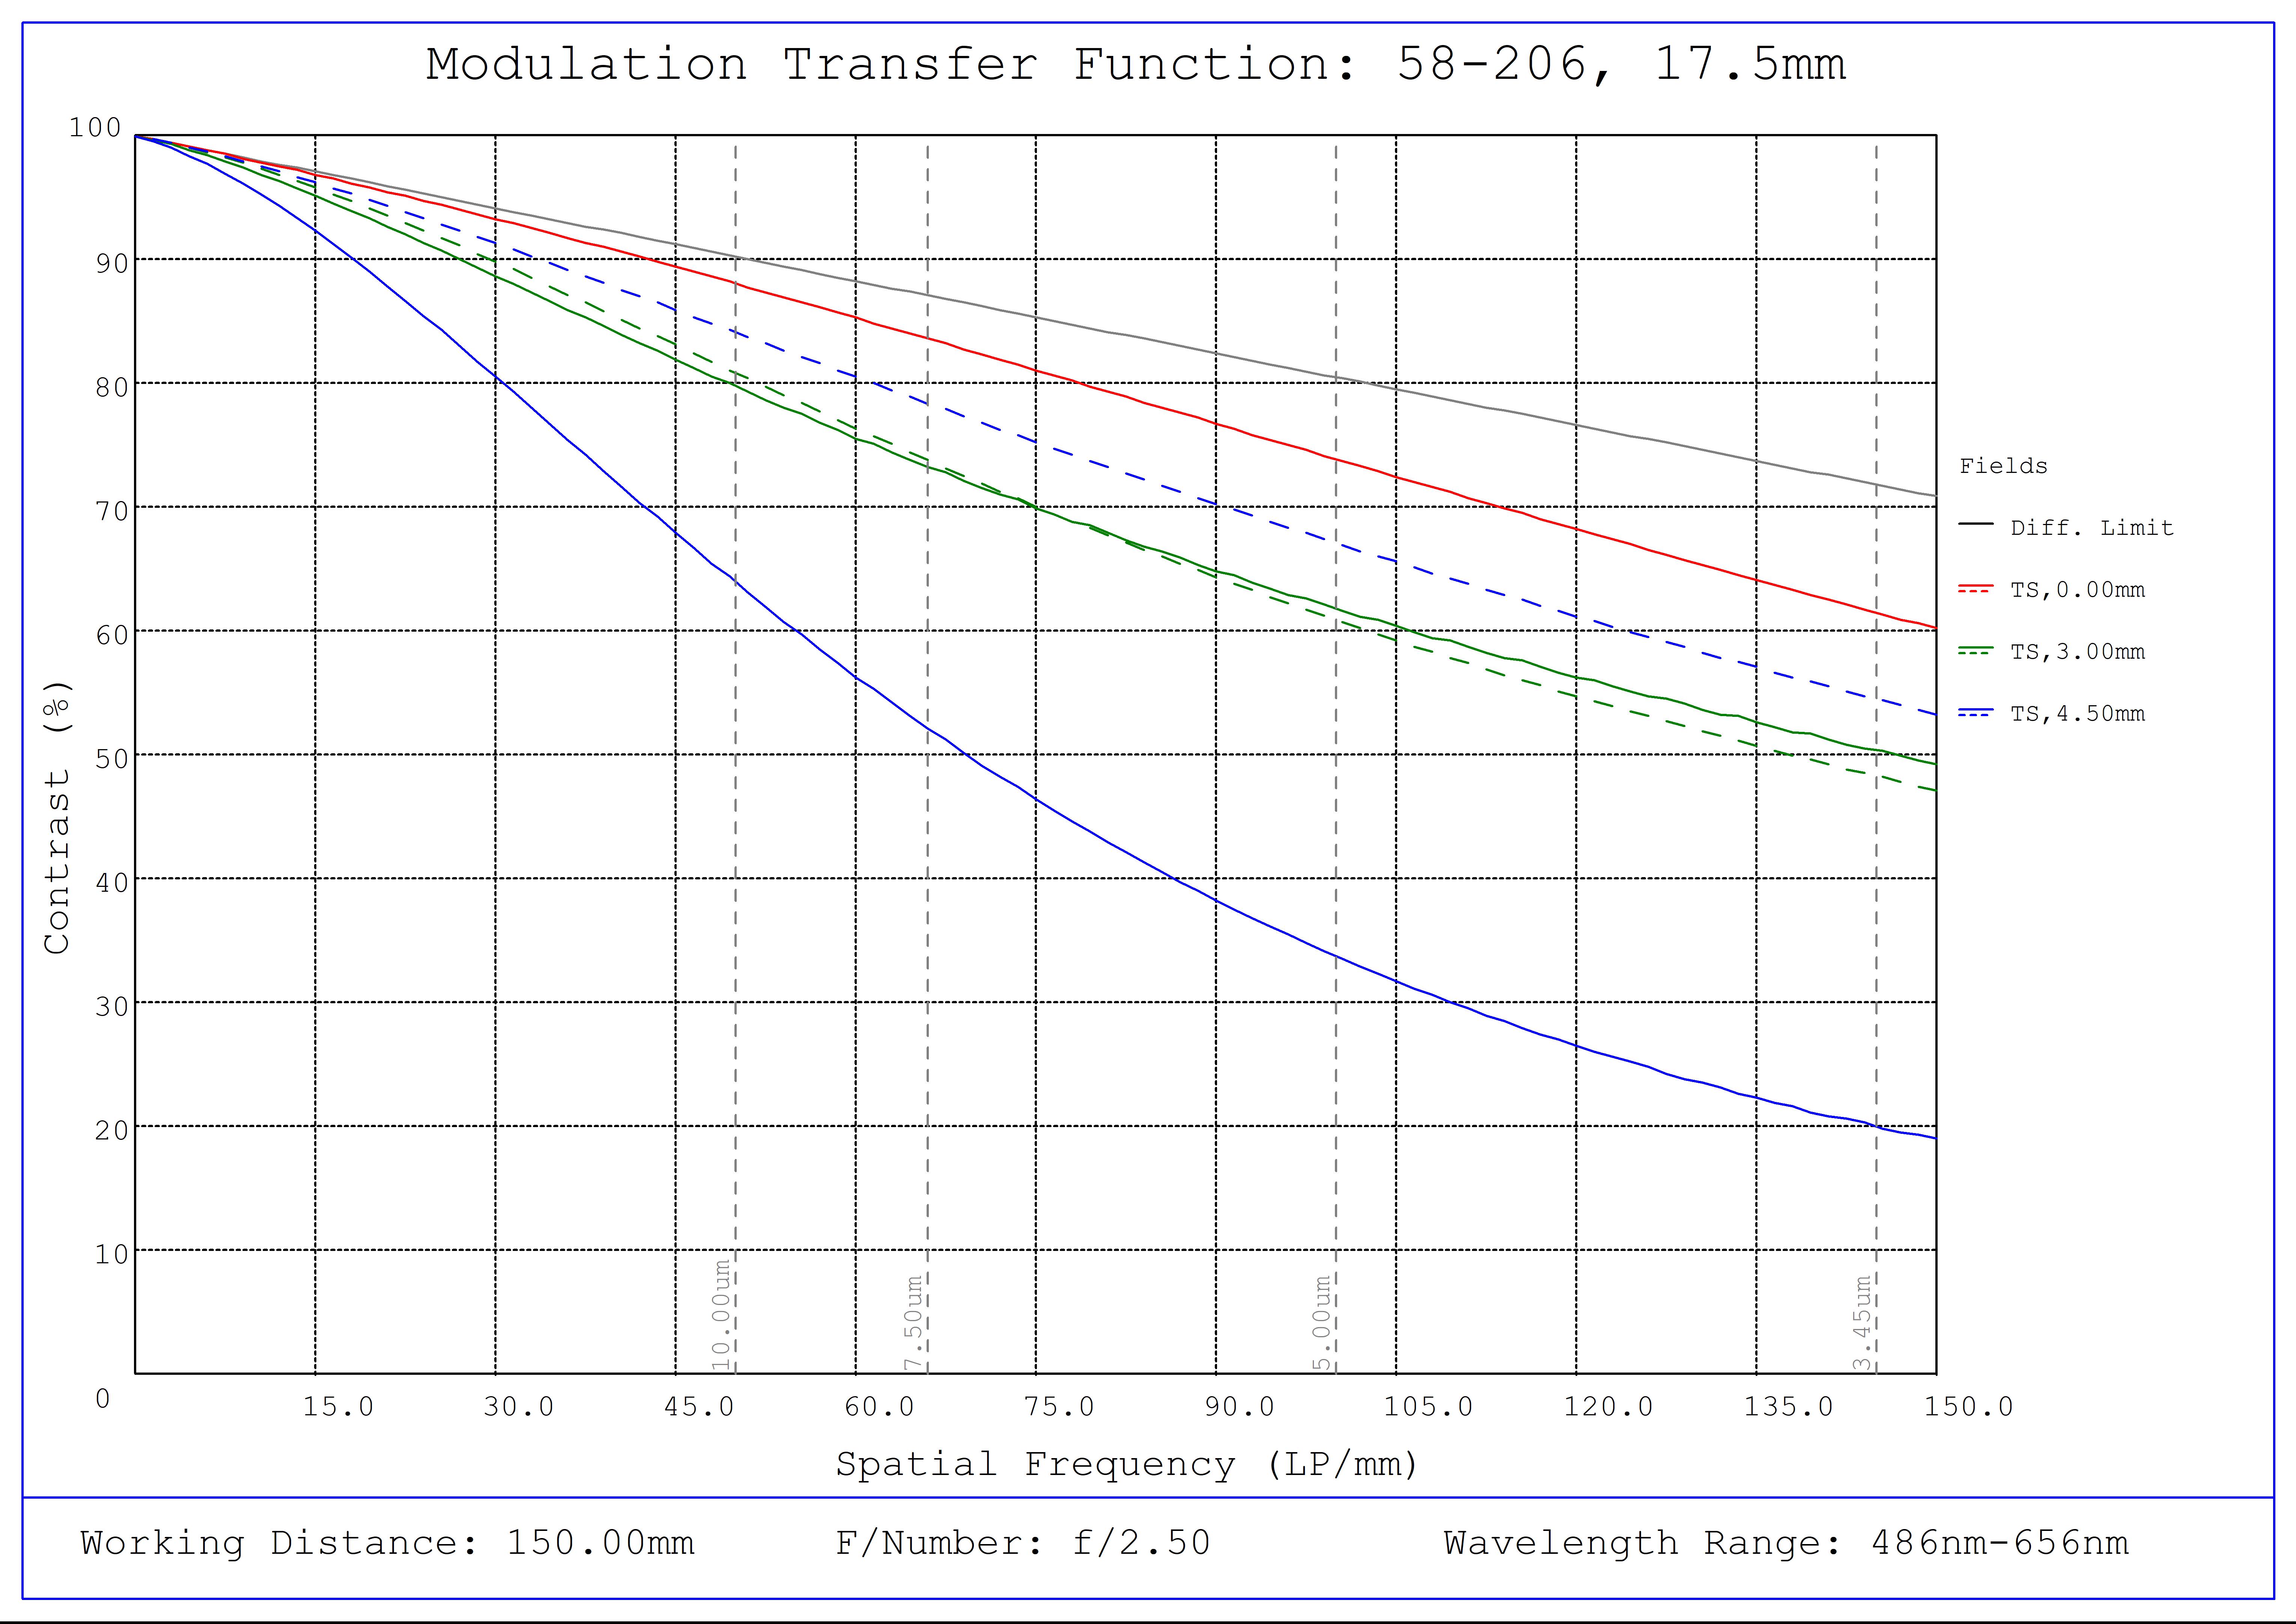 #58-206, 17.5mm FL f/2.5, Blue Series M12 Lens, Modulated Transfer Function (MTF) Plot, 150mm Working Distance, f2.5